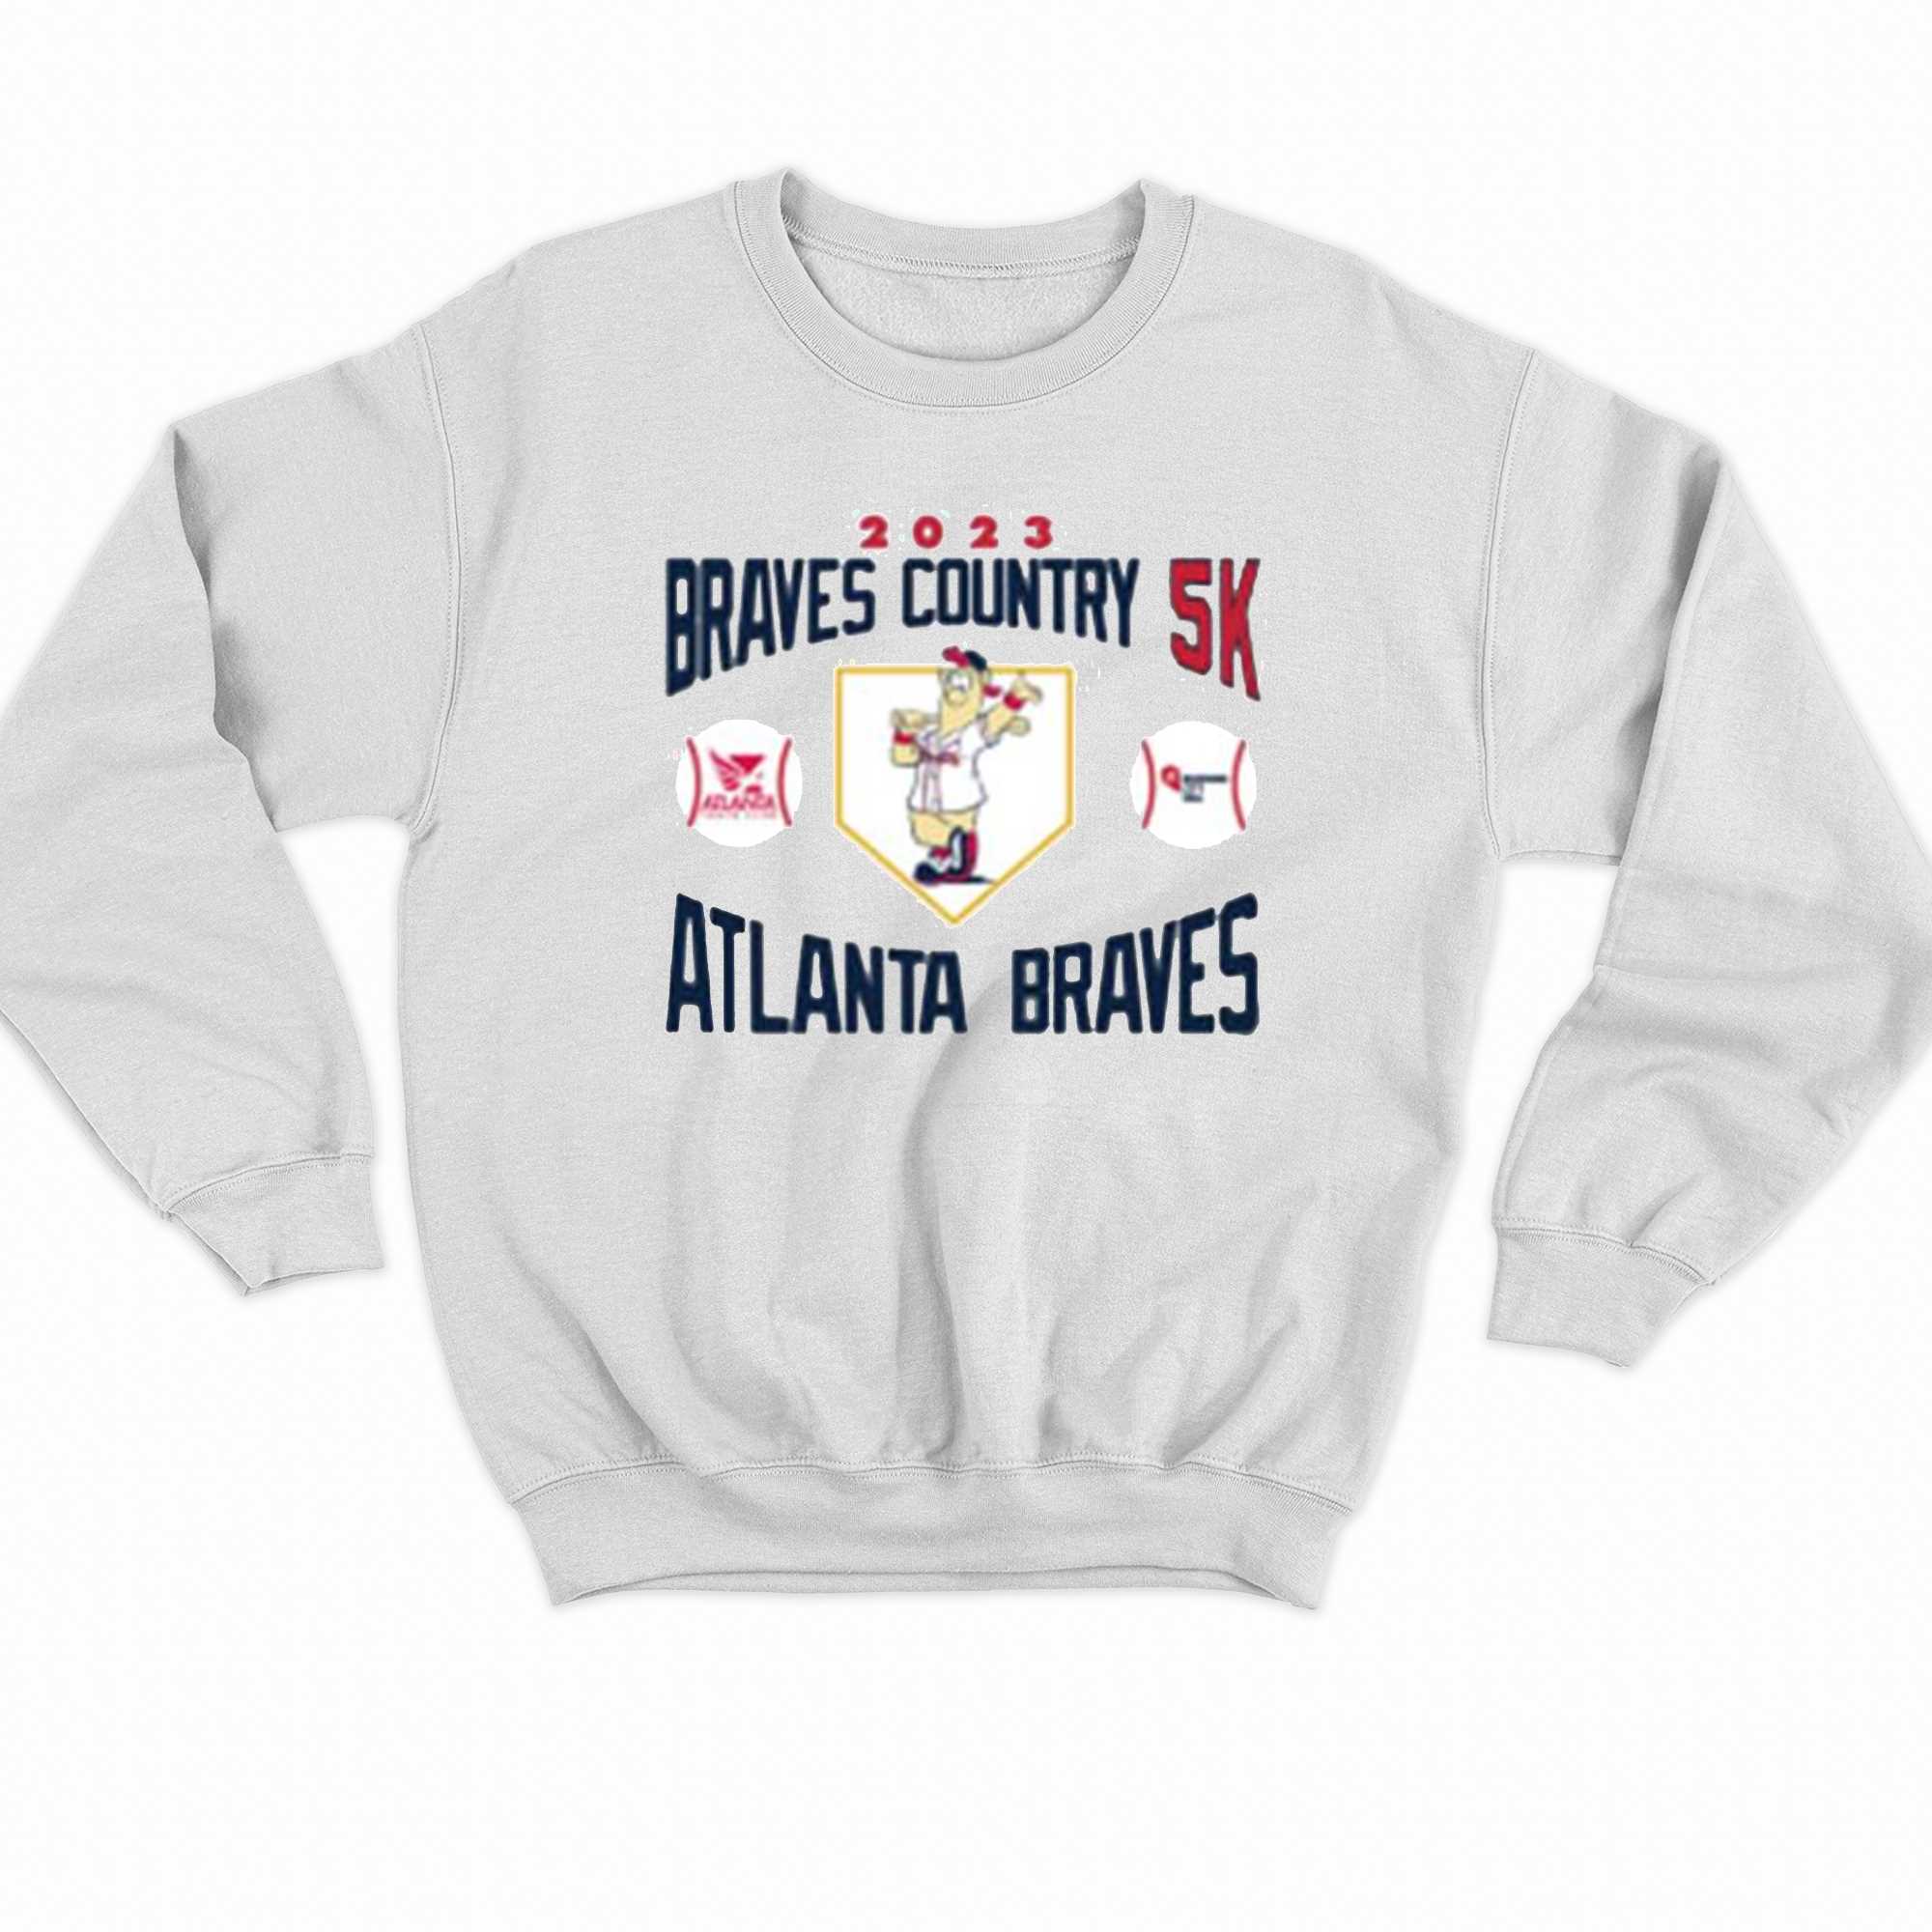 Braves Country 5k Atlanta Braves 2023 Shirt 